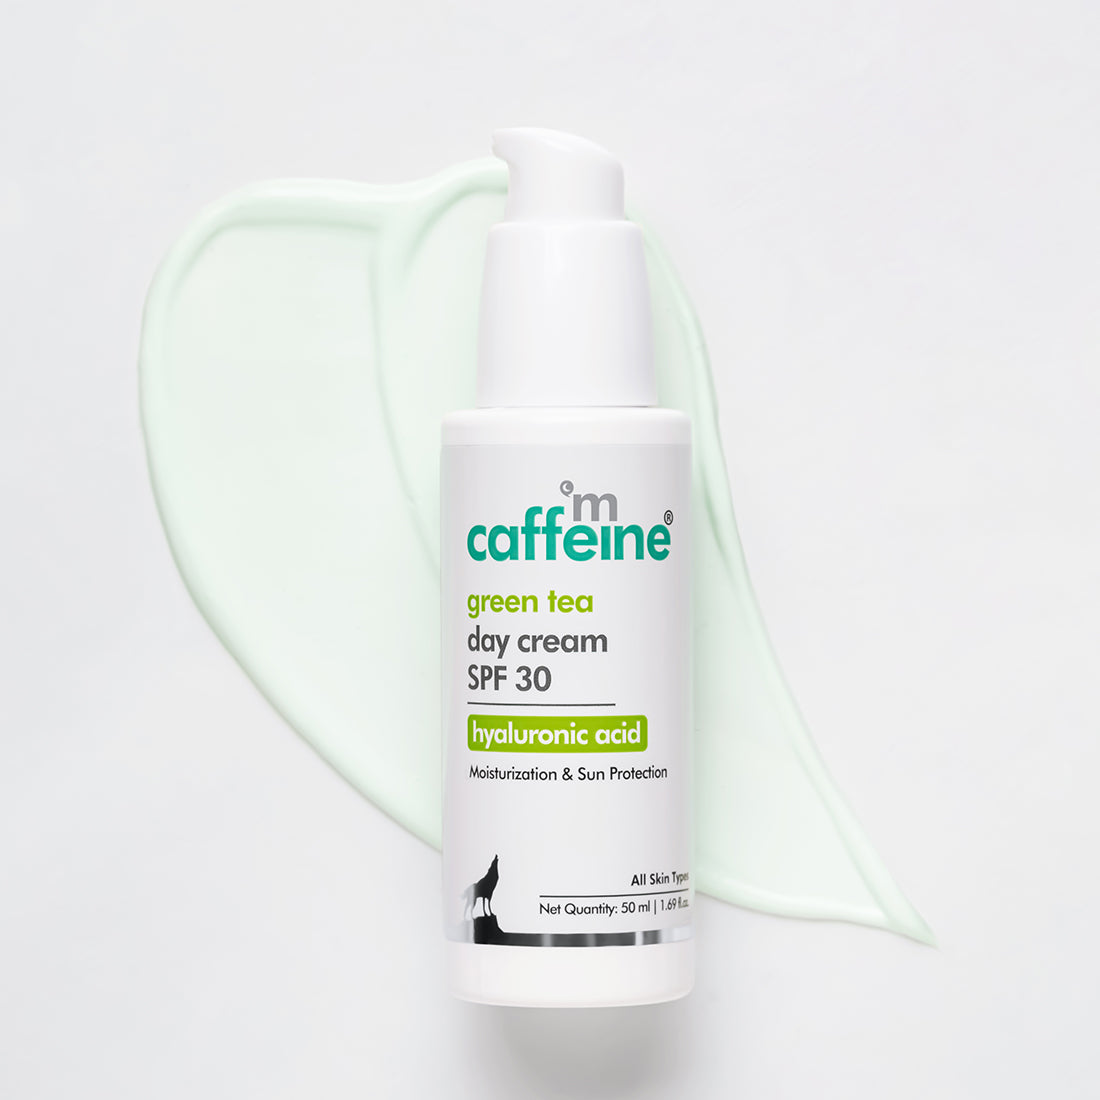 mCaffeine Green Tea day cream SPF 30 with hyaluronic acid